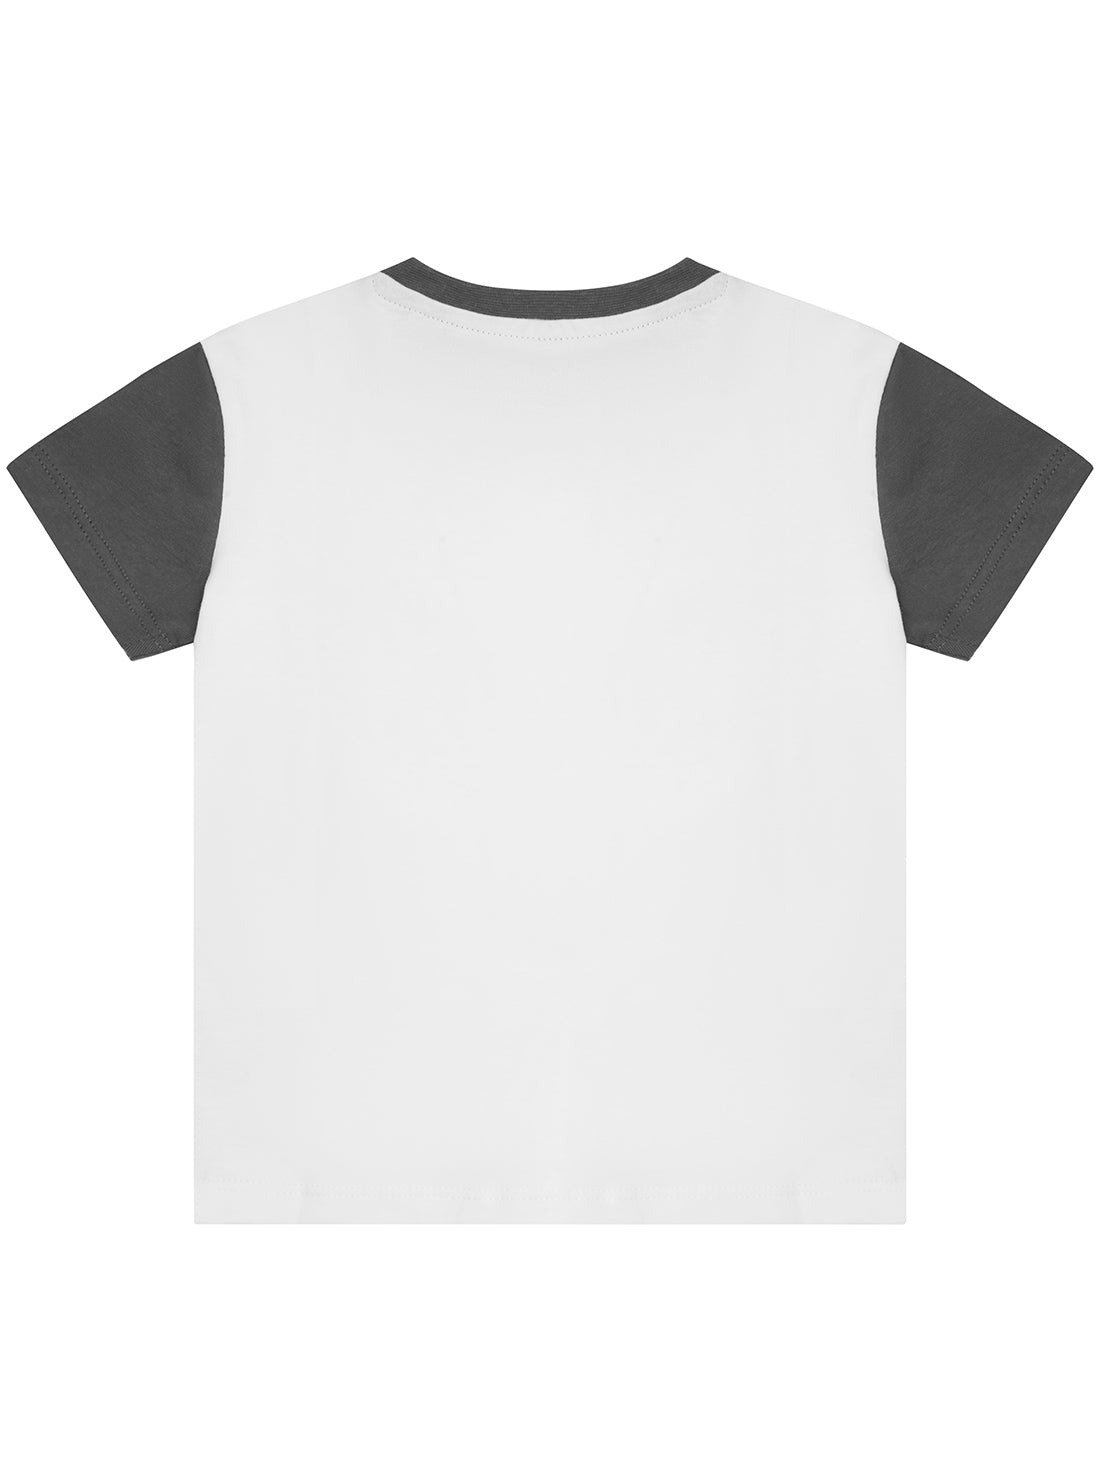 GUESS White Logo Short Sleeve T-Shirt (2-7) back view